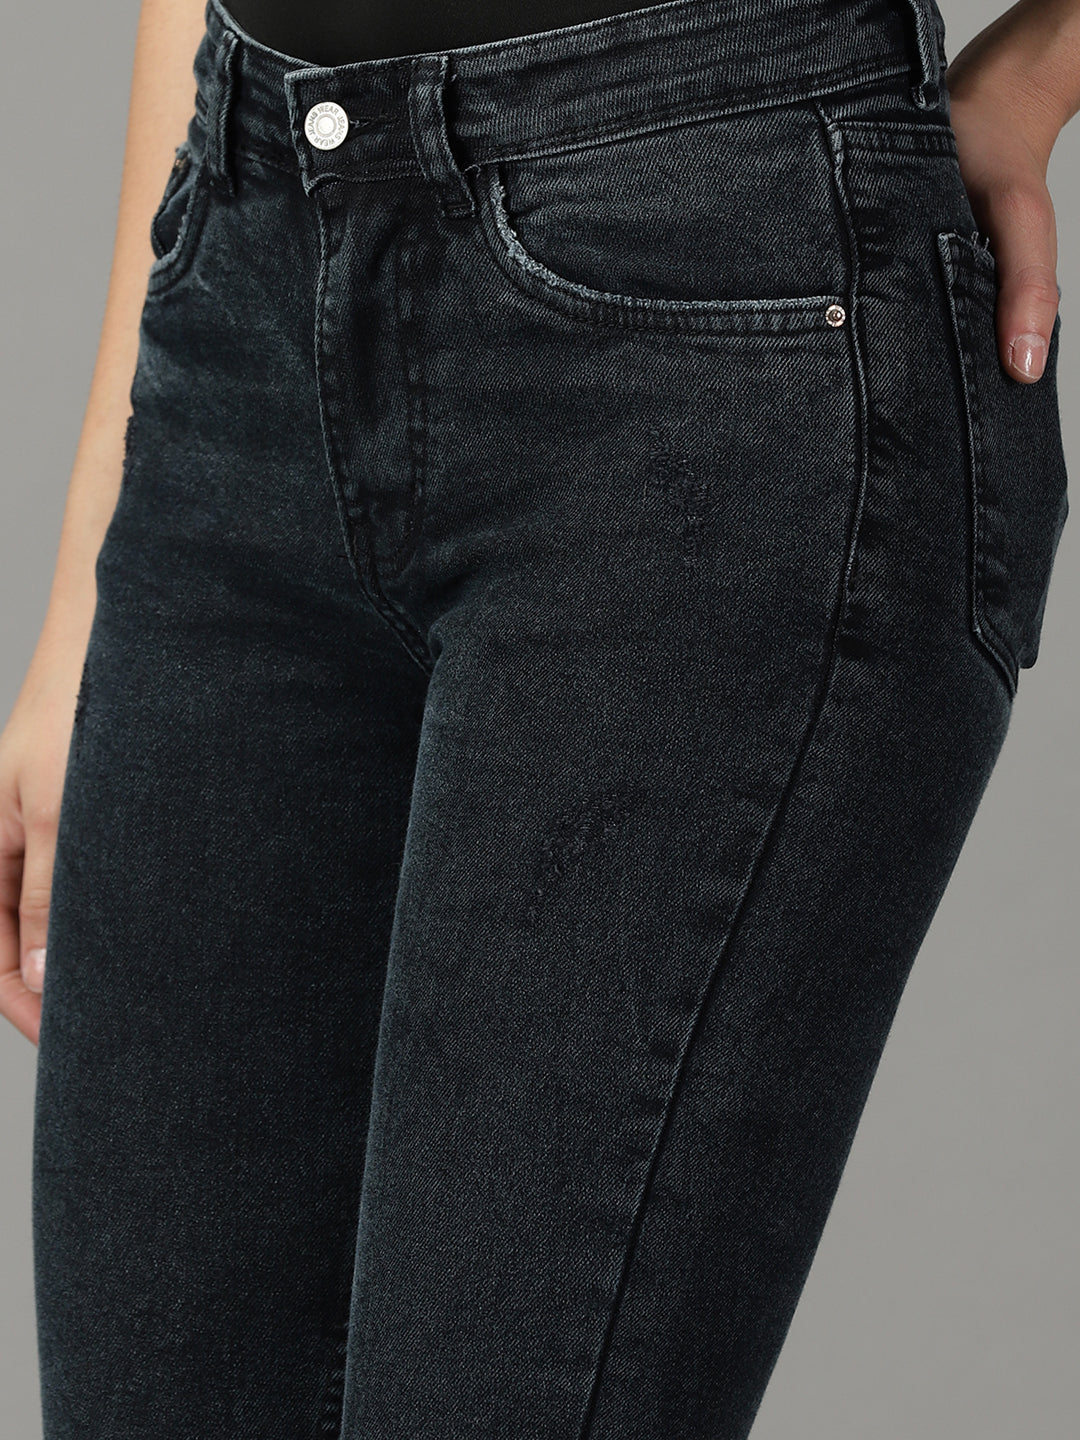 Women's Black Solid Slim Fit Denim Jeans